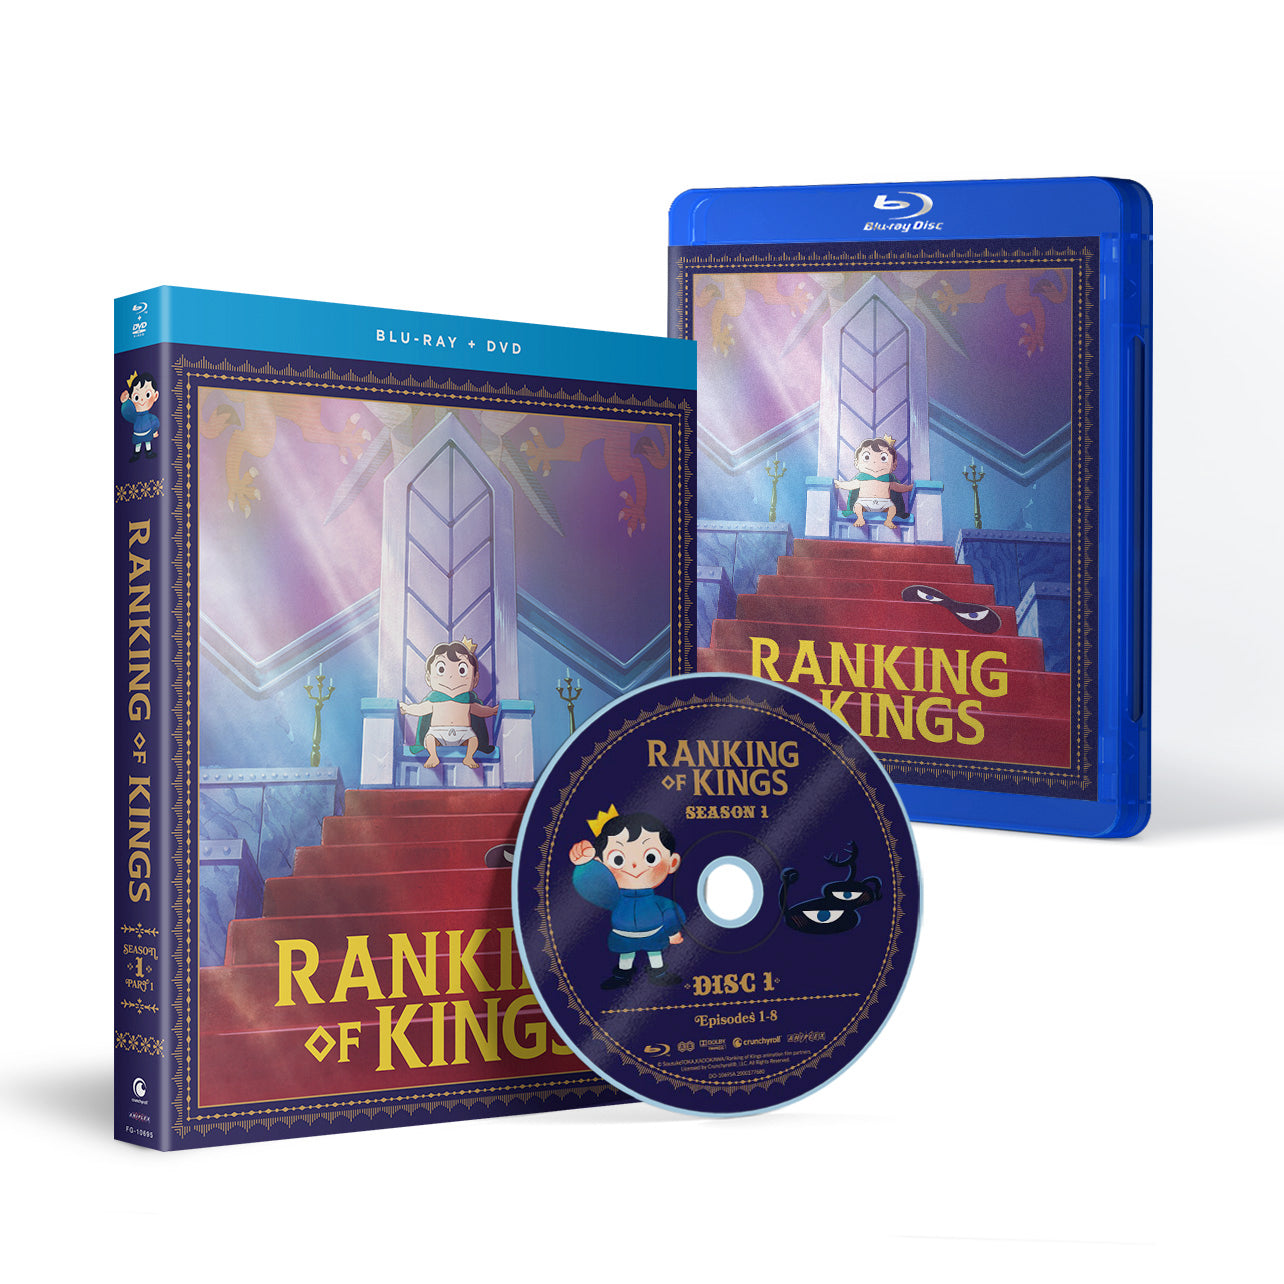 Ranking of Kings - Season 1 Part 1 - BD/DVD image count 0